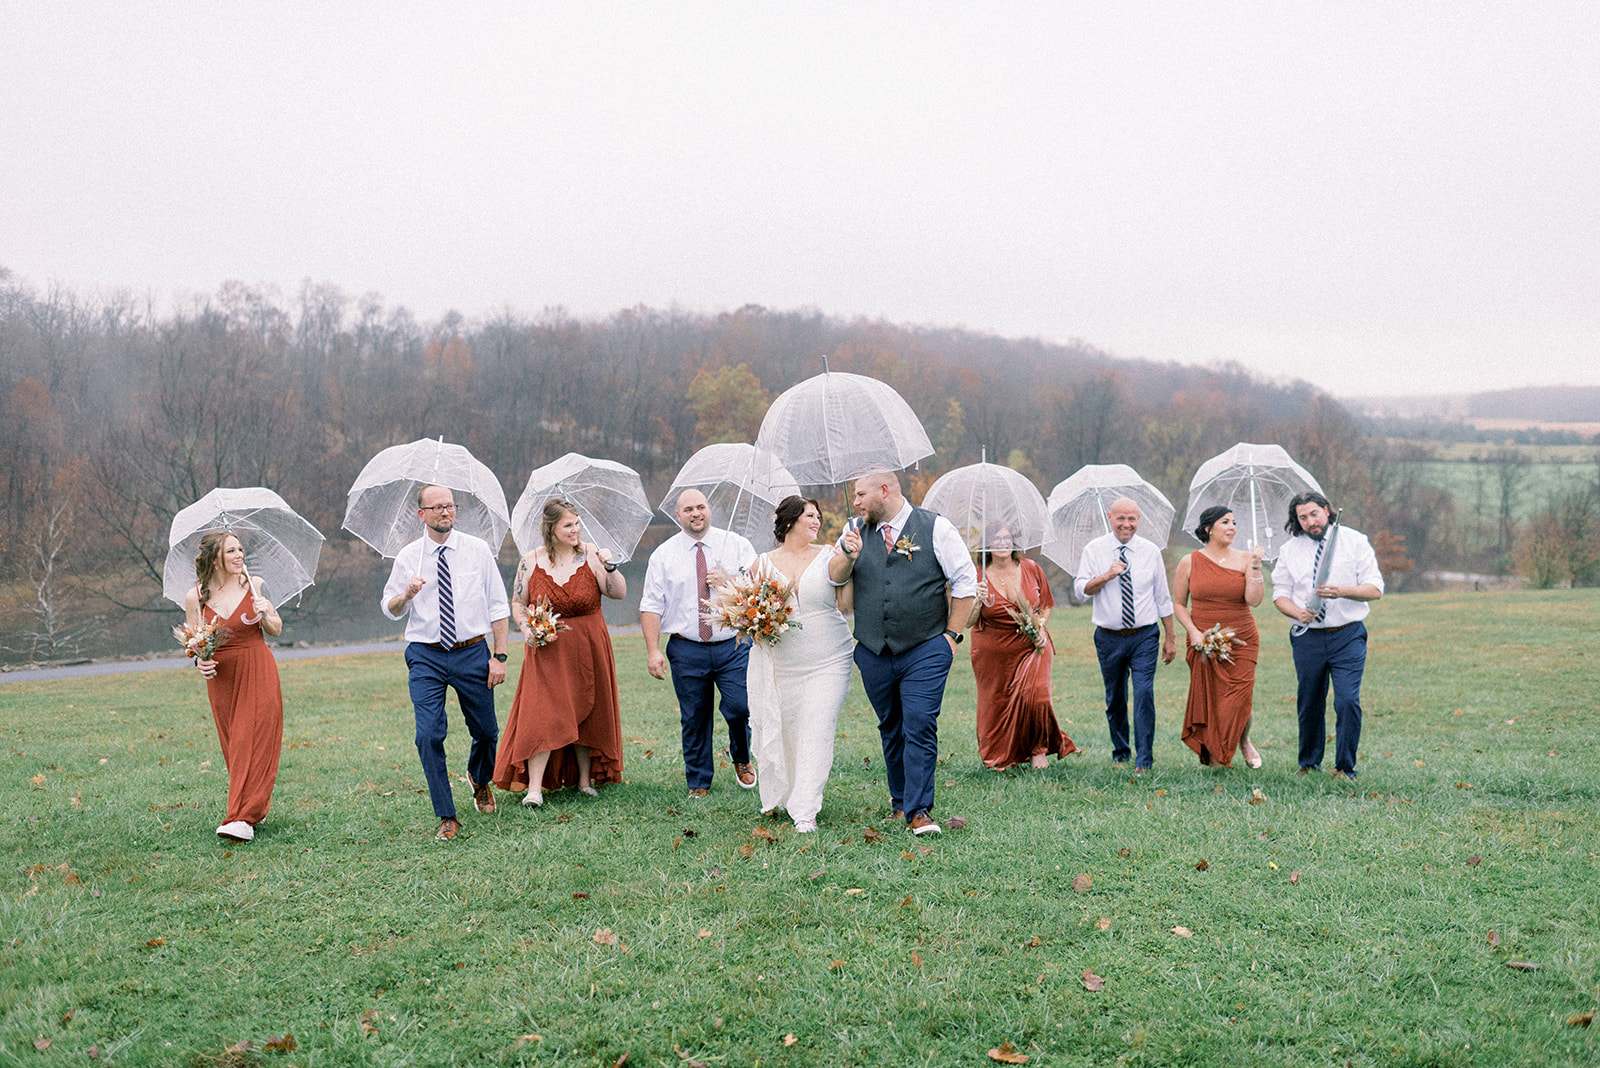 Pennsylvania wedding photographer captures bride and groom walking together with umbrella